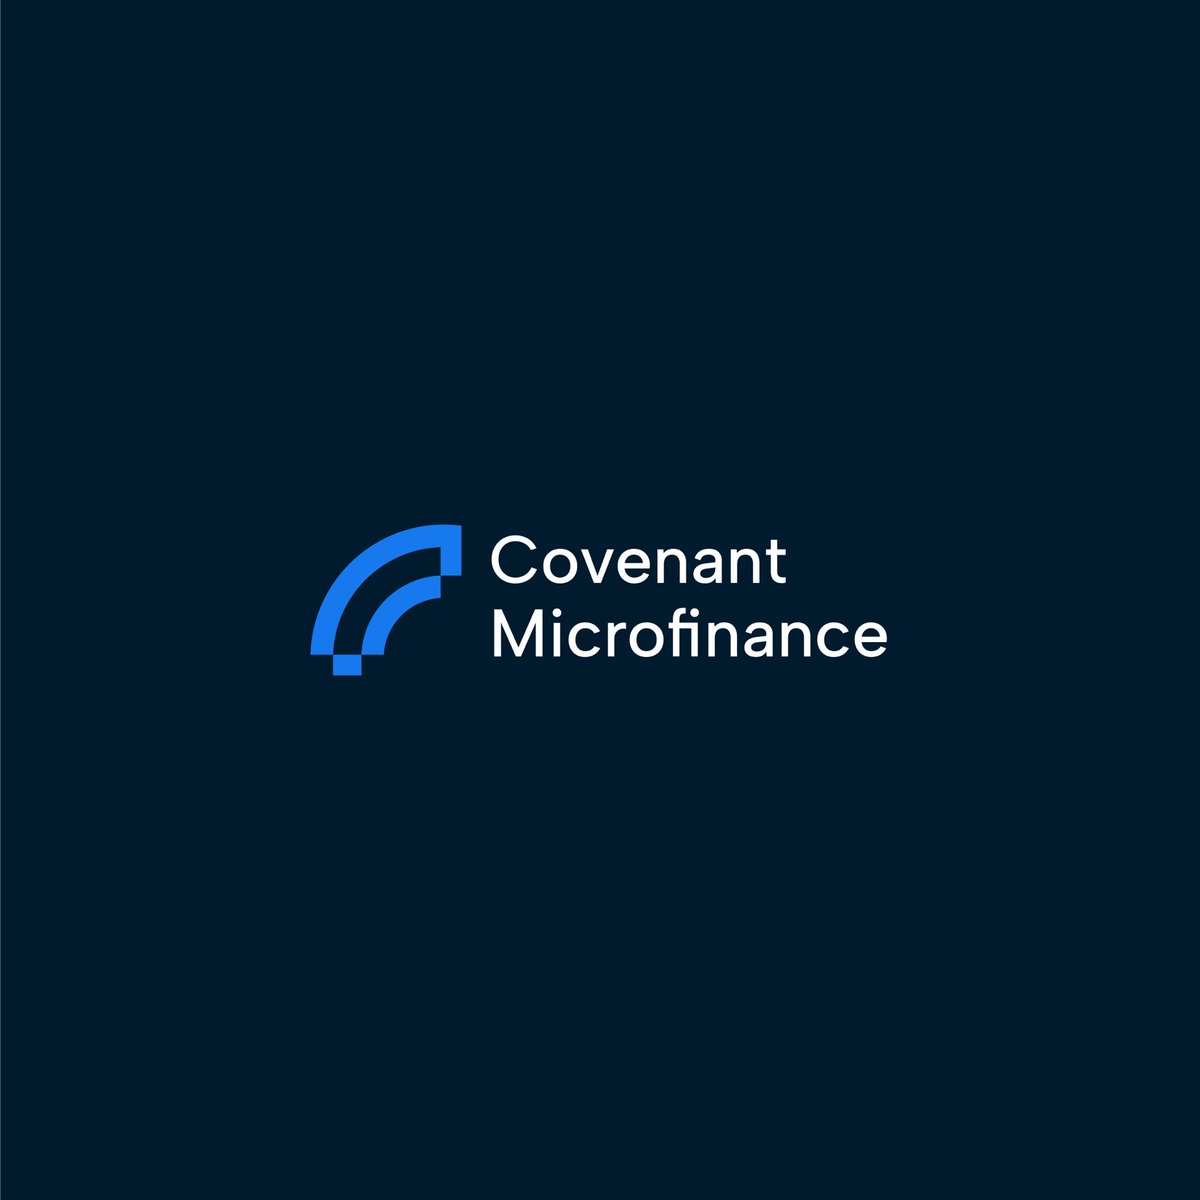 A proposed logo redesign for Covenant Microfinance Bank.
.
.
#sanmiisrl #illustrator #adebo #logotypedesign #minimallogo #logofolio #brandlogo #visualgraphic #graphicsdesigner #visualcommunication #logoideas #freelancedesigner #graphicdesigns #graphicsdesign